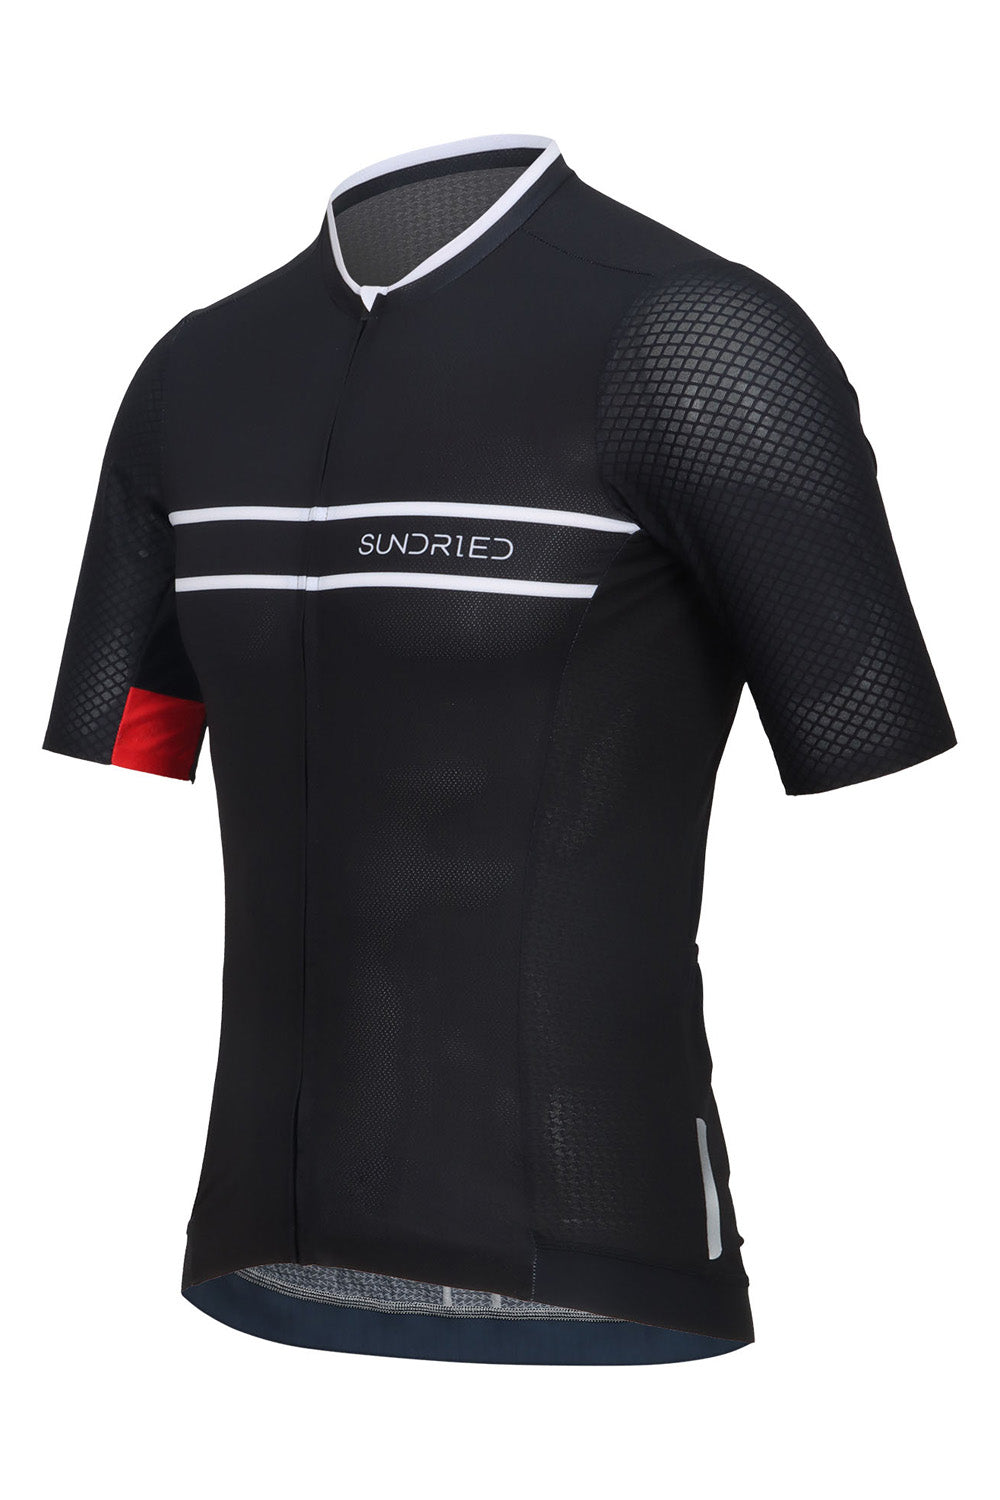 Sundried Pro Men's Black Short Sleeve Cycle Jersey Short Sleeve Jersey Activewear